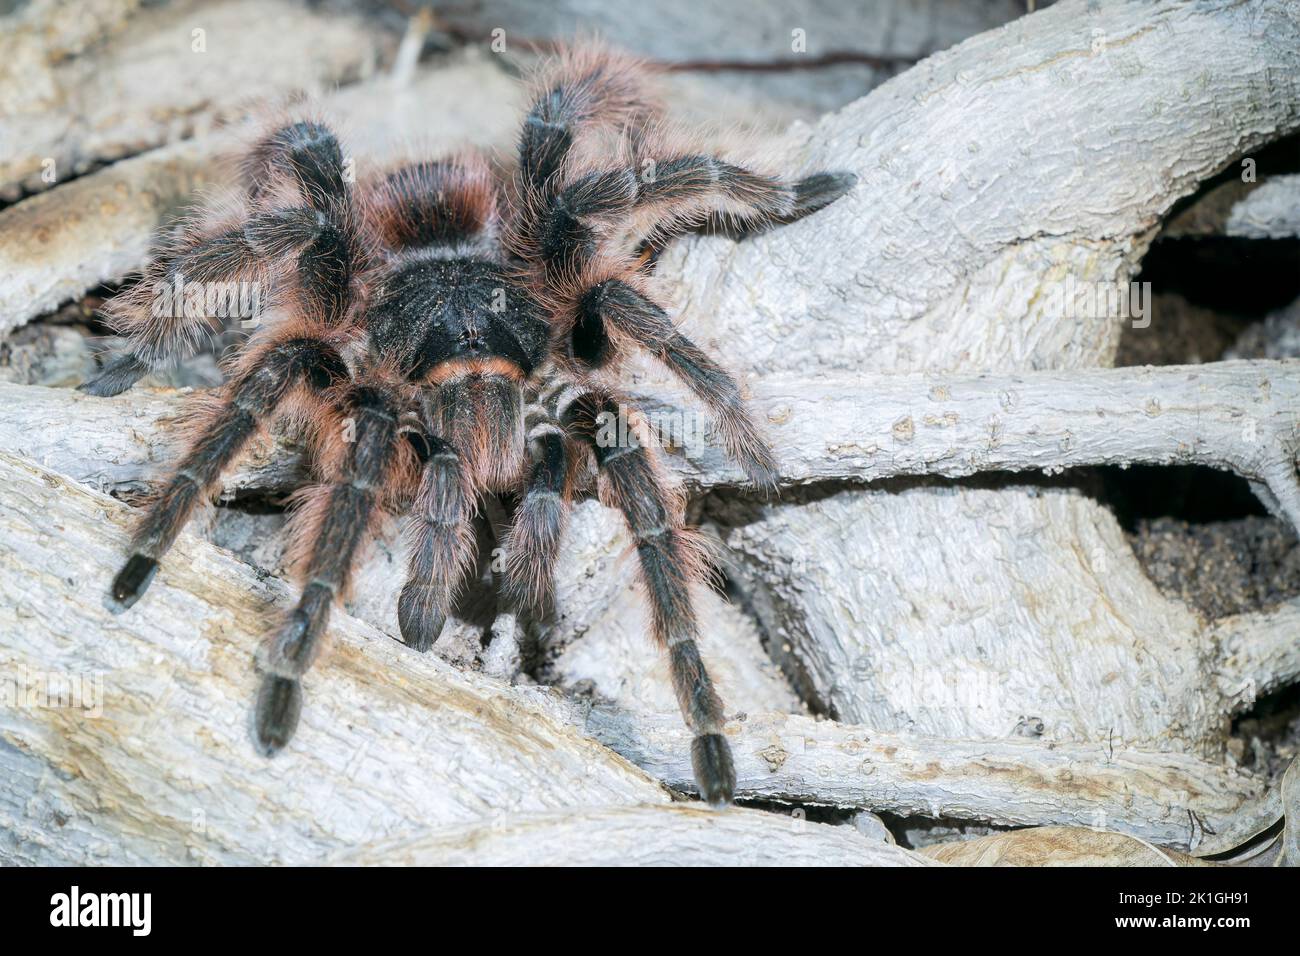 Brazilian black tarantula spider, Grammostola pulchra, single adult walking over tree root, Pantanal, Brazil Stock Photo